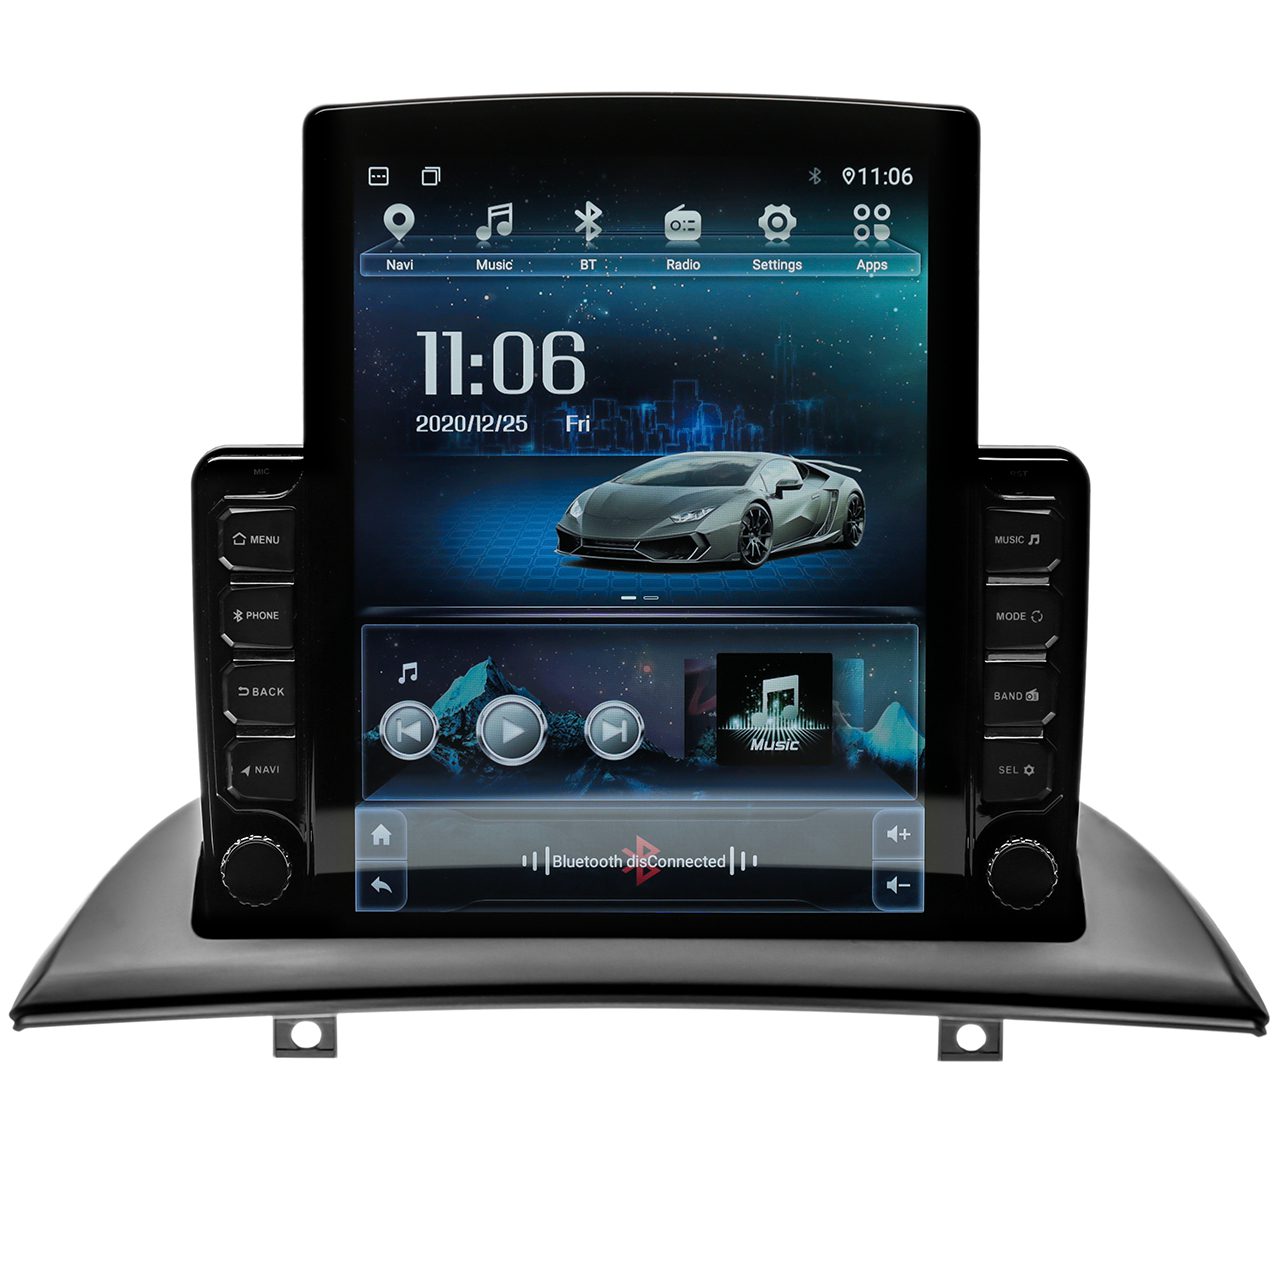 Navigatie AUTONAV Android GPS Dedicata BMW X3 E83, Model XPERT Memorie 128GB Stocare, 6GB DDR3 RAM, Butoane Si Volum Fizice, Display Vertical Stil Tesla 10